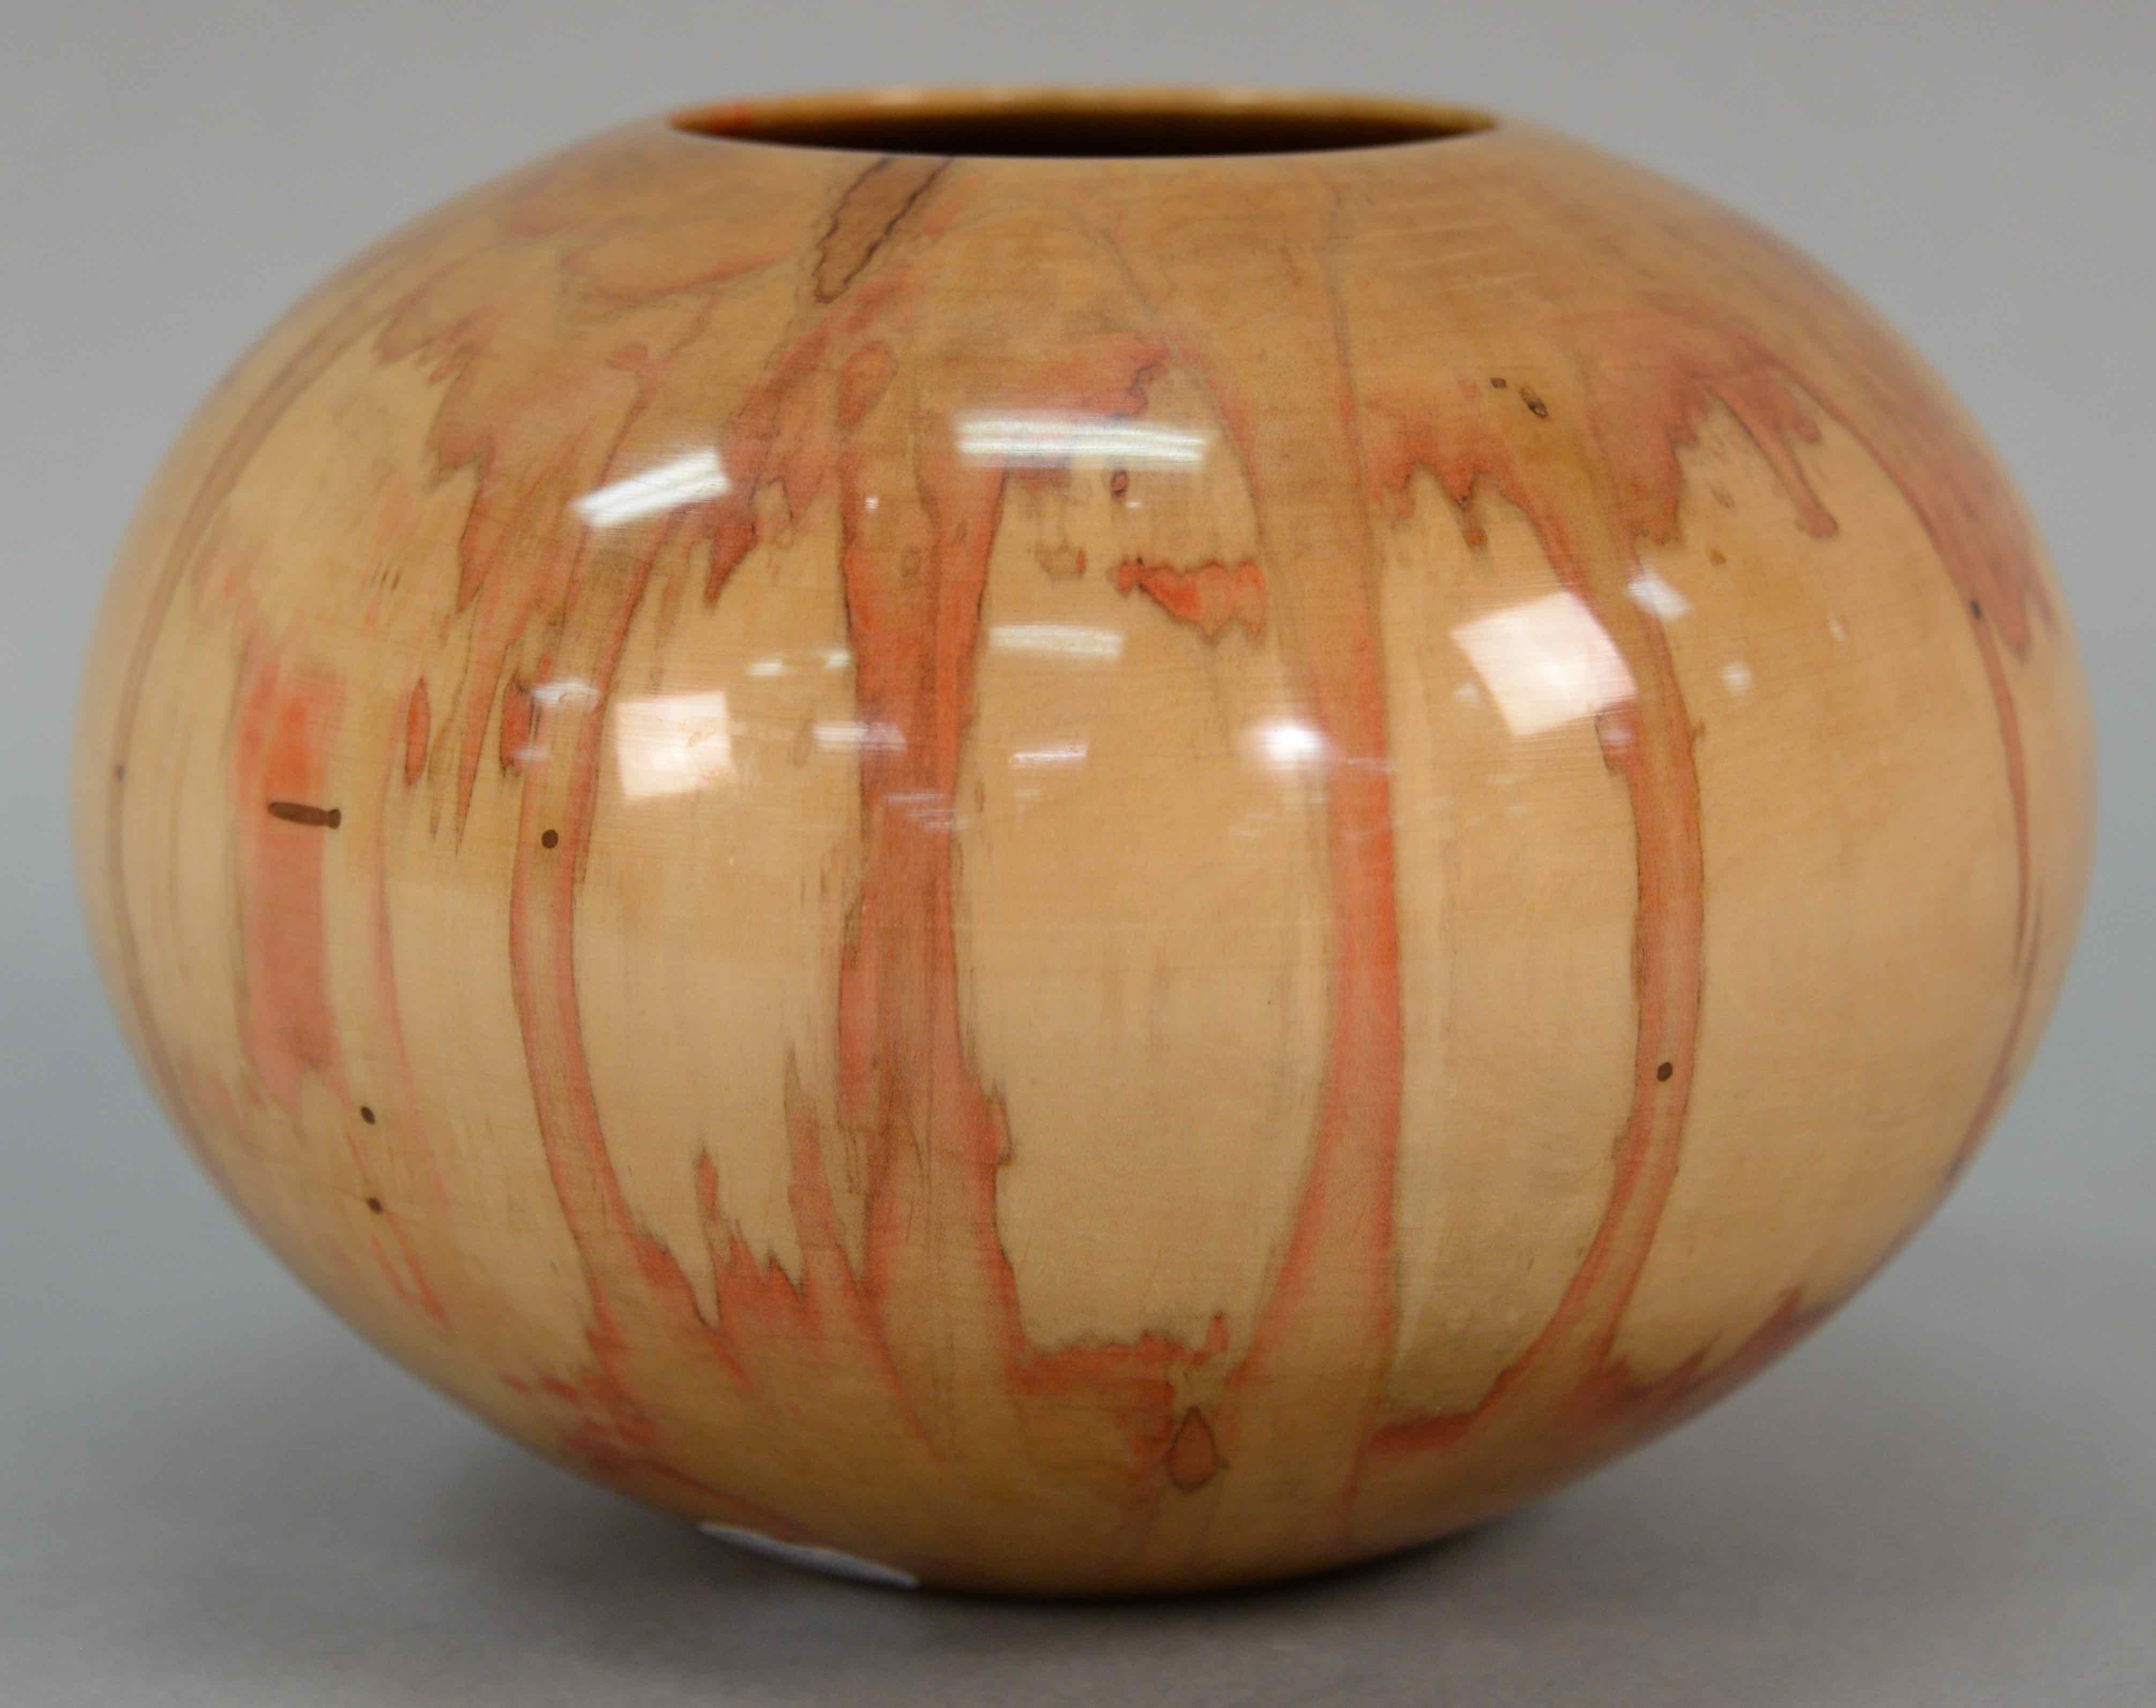 Philip Moulthrop (b. 1947), large turned wooden bowl/vase, estimated at $500-1,000.